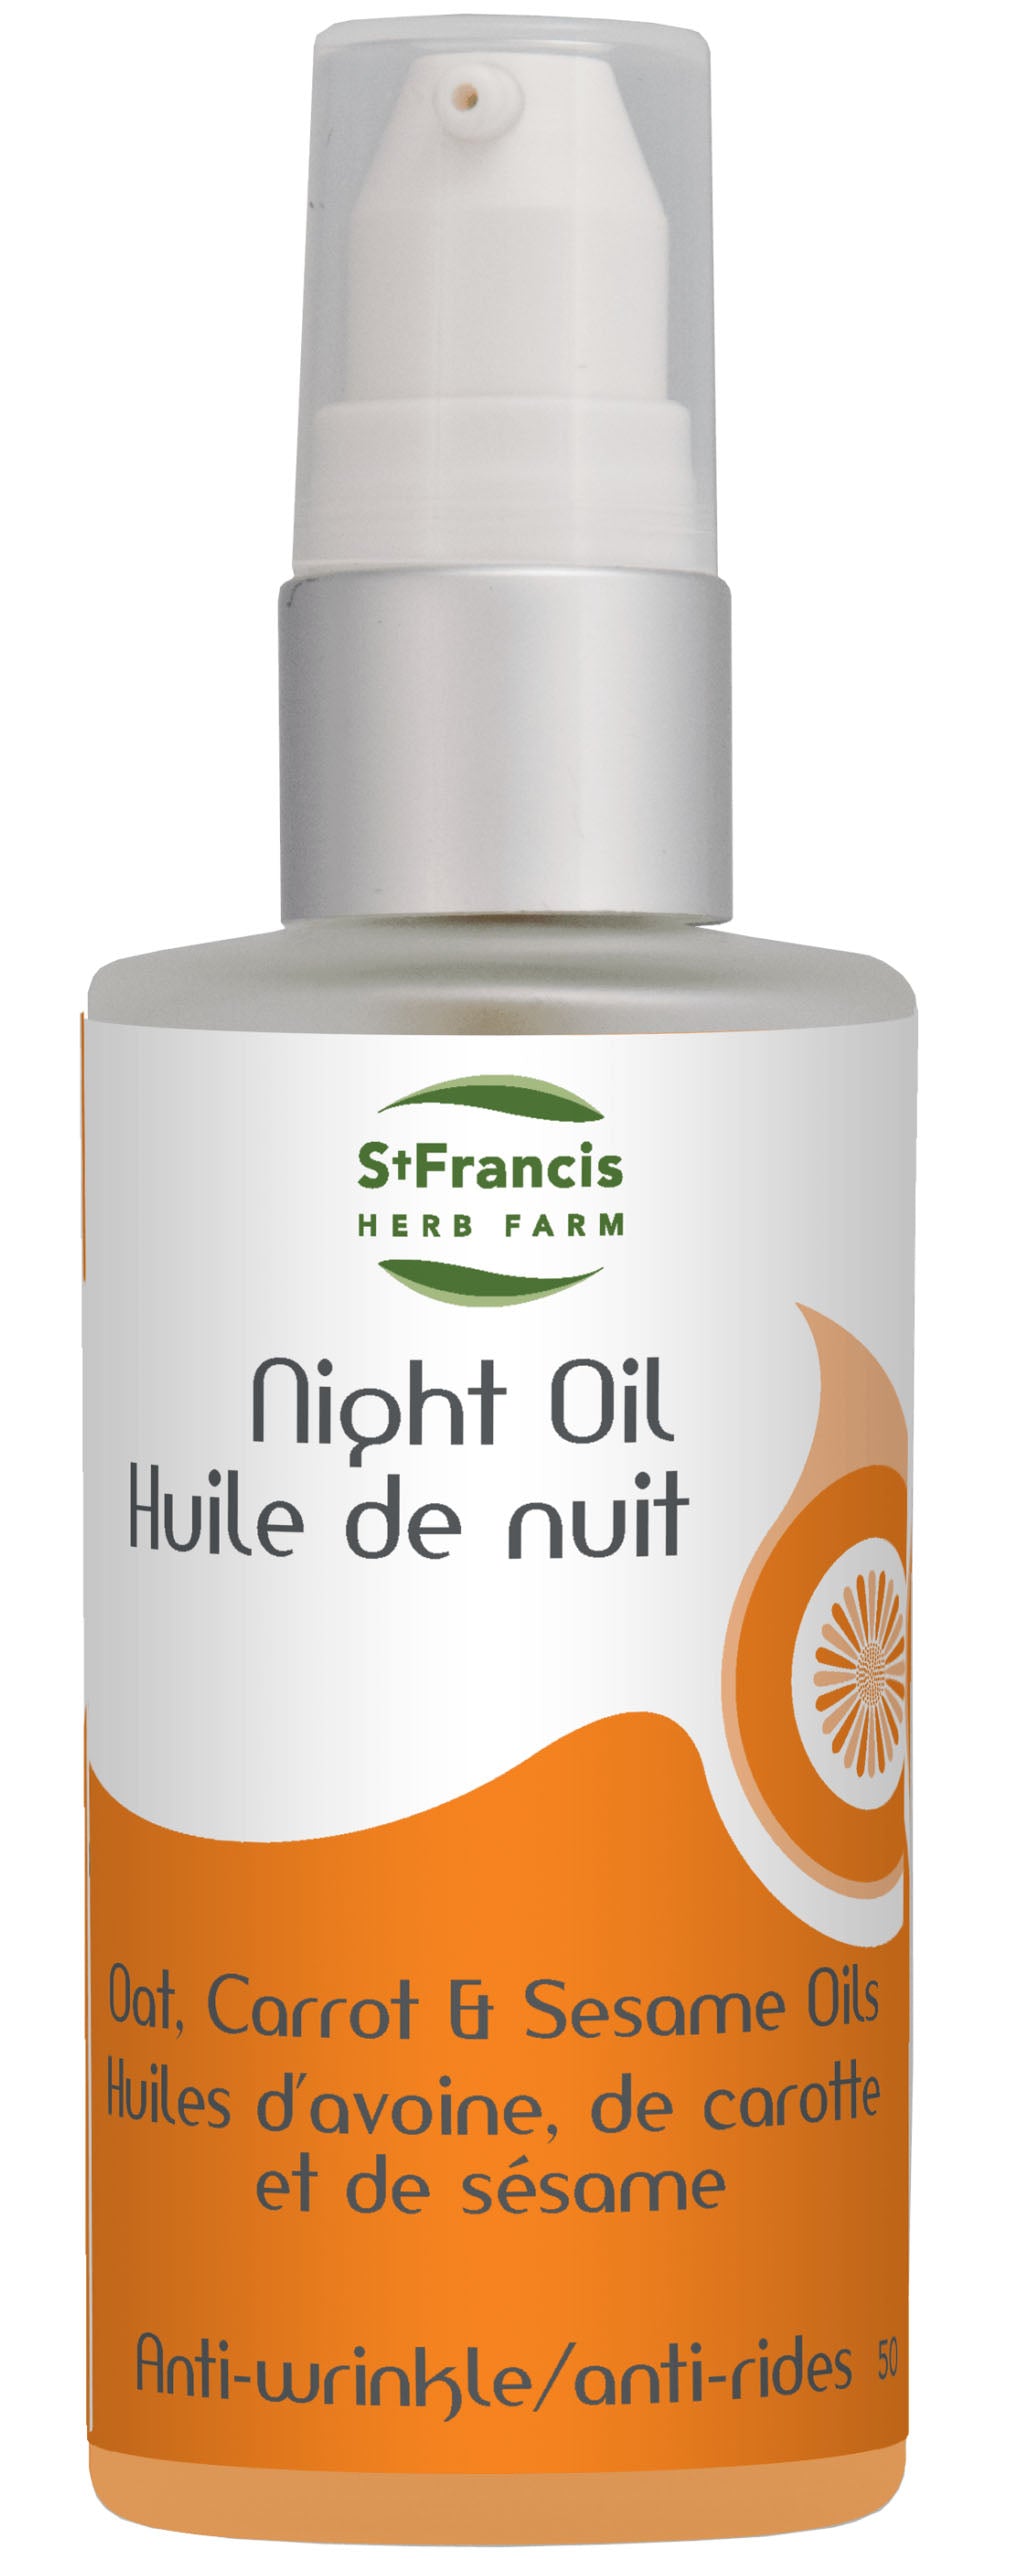 ST FRANCIS HERB FARM Night Oil (50 ml)